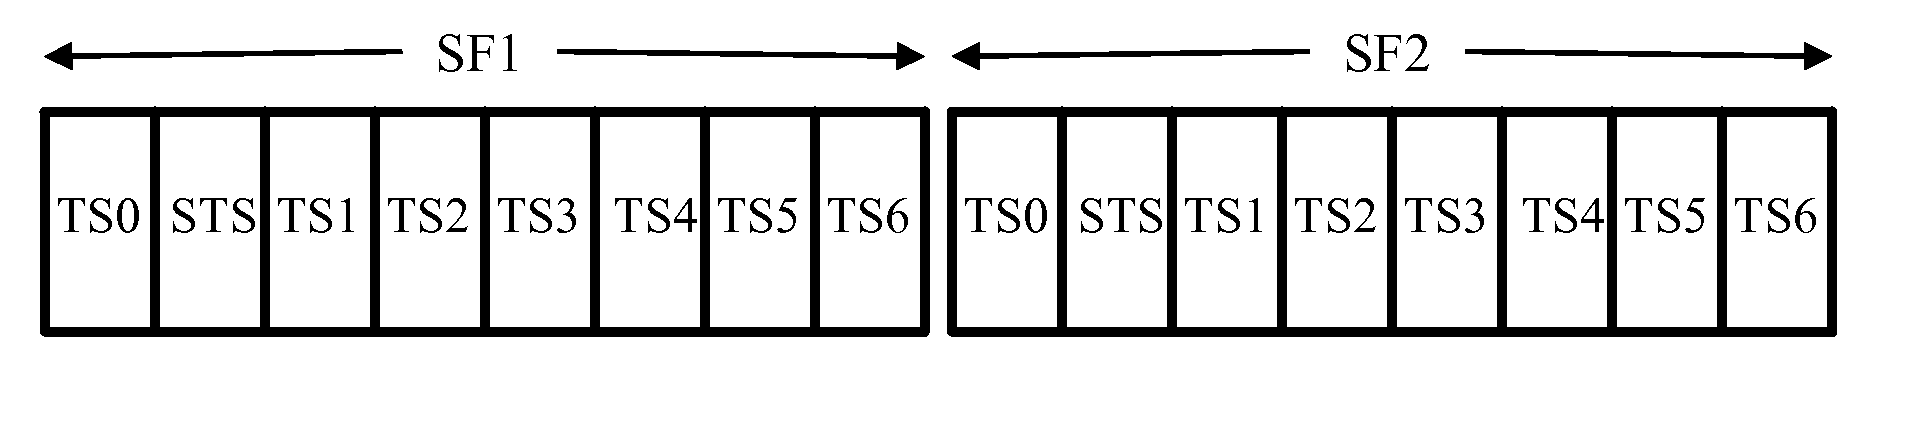 System Level Emulation of TD-SCDMA Wireless Networks